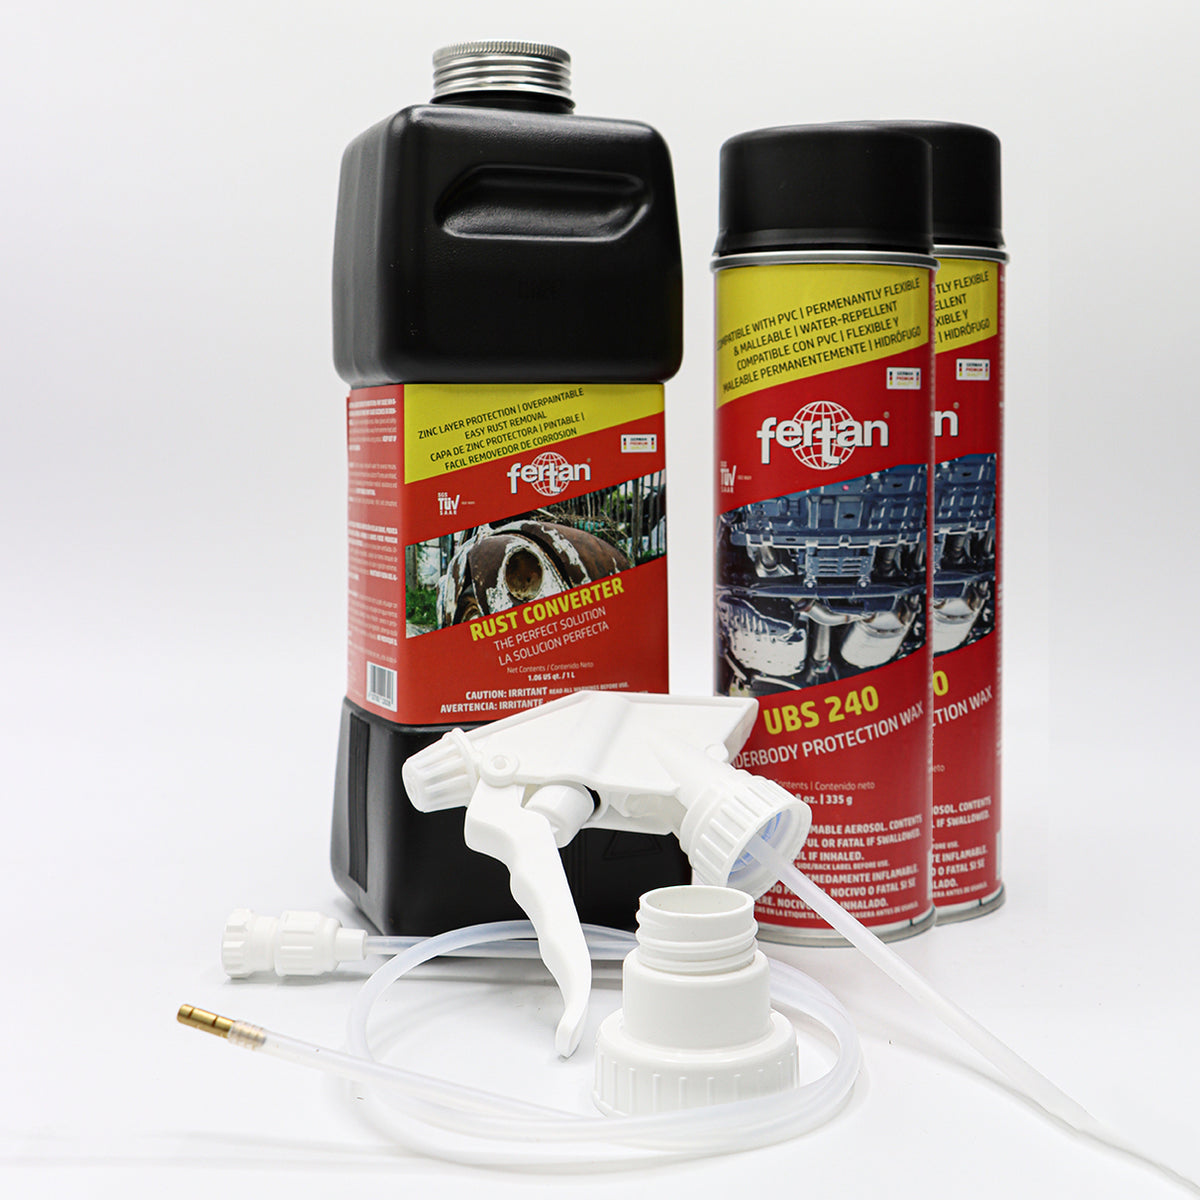 Underbody restoration kit – Professional - Wax Based Beige